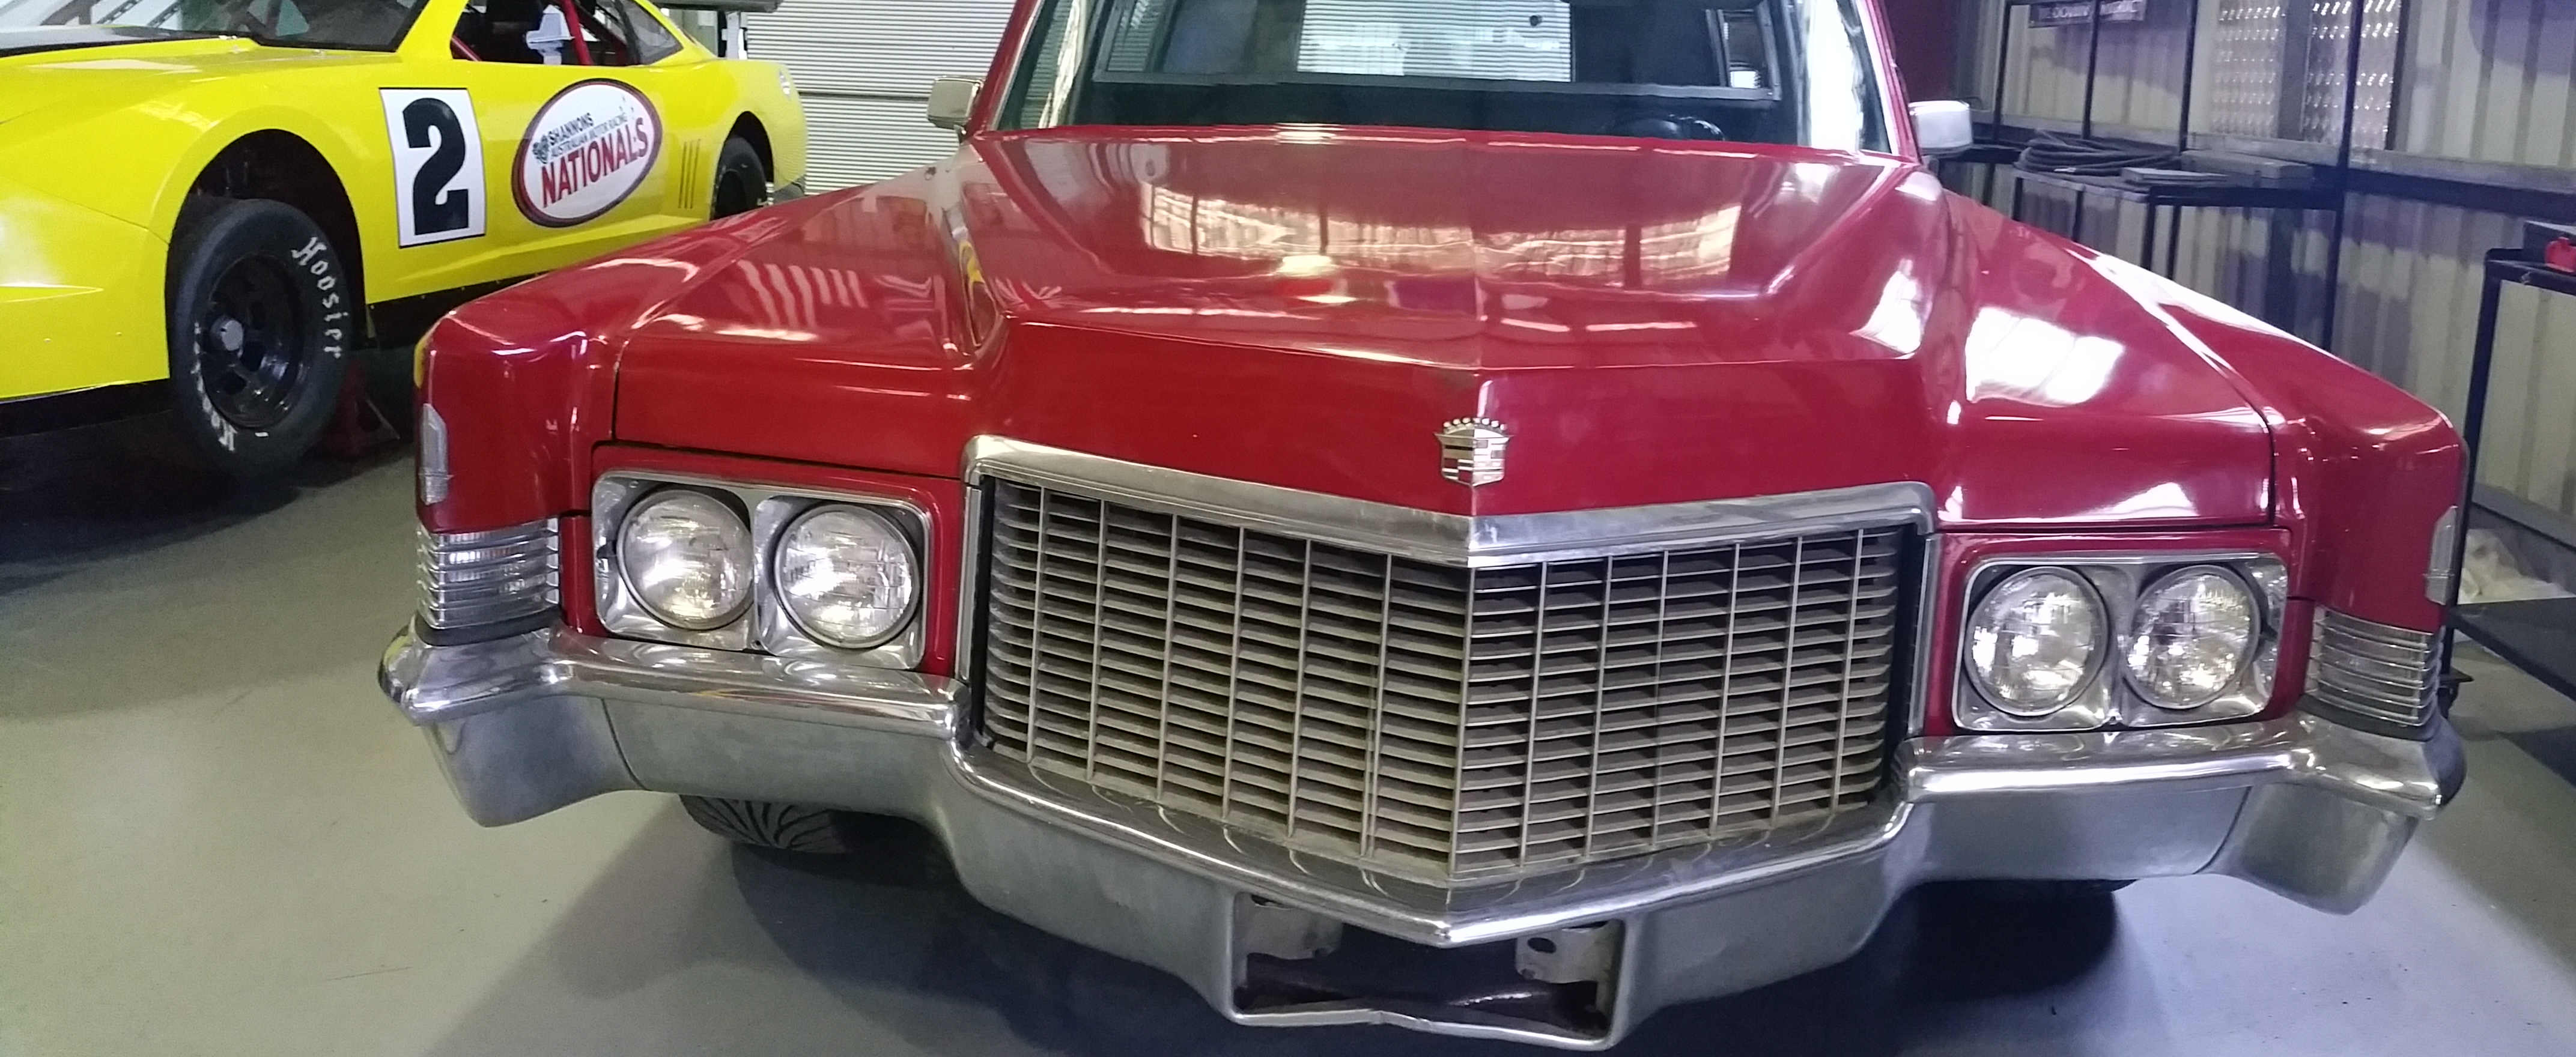 1970 Cadillac Superior Hearse